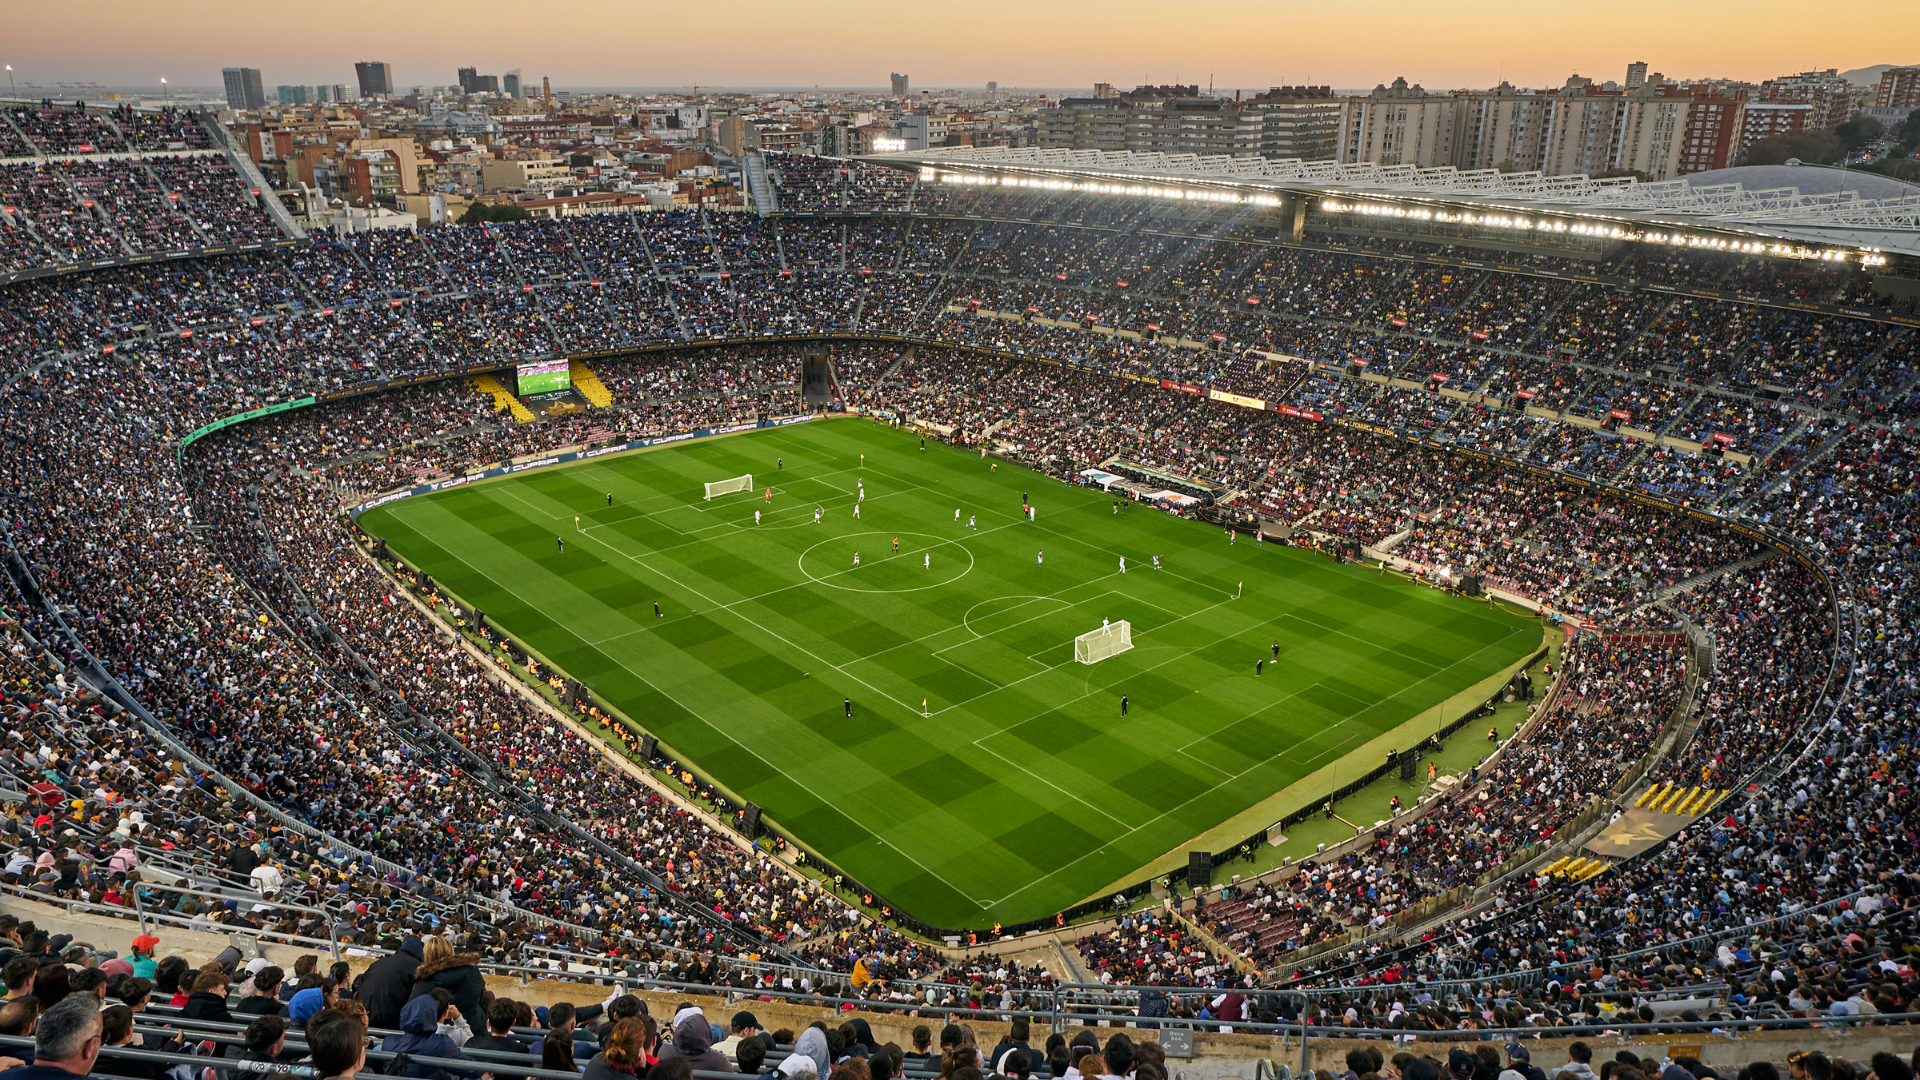 The Camp Nou hosts 92,522 for the Kings League InfoJobs final